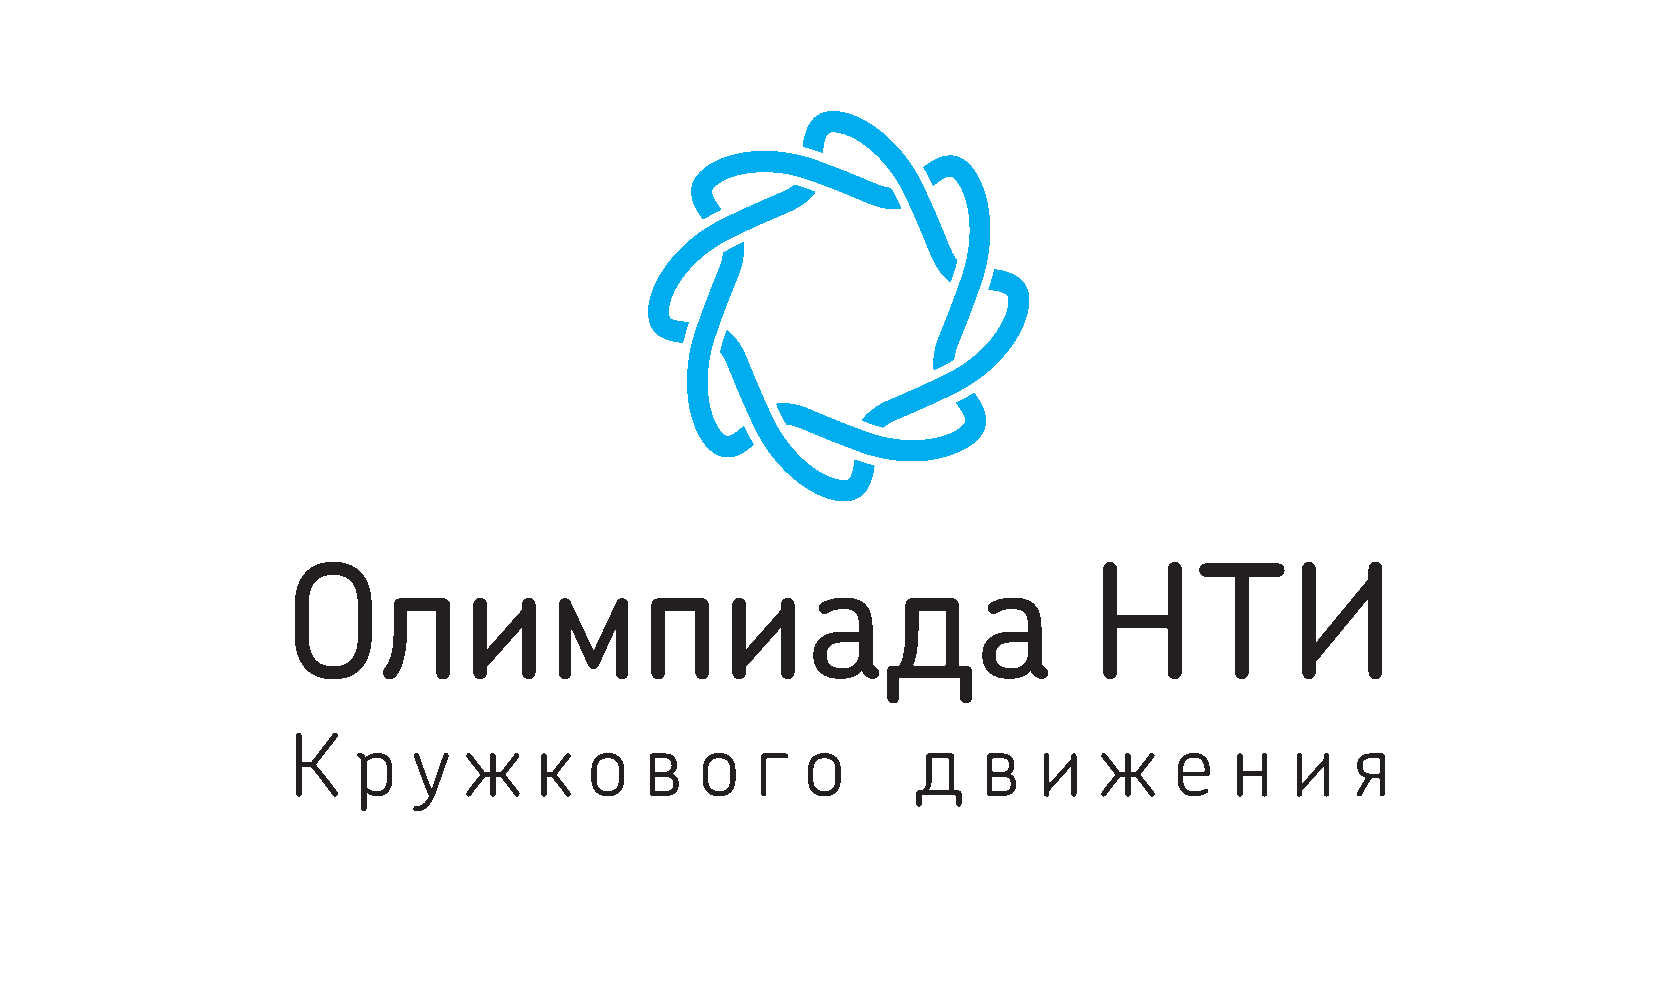 Nti team. НТИ логотип. Национальная технологическая инициатива логотип.